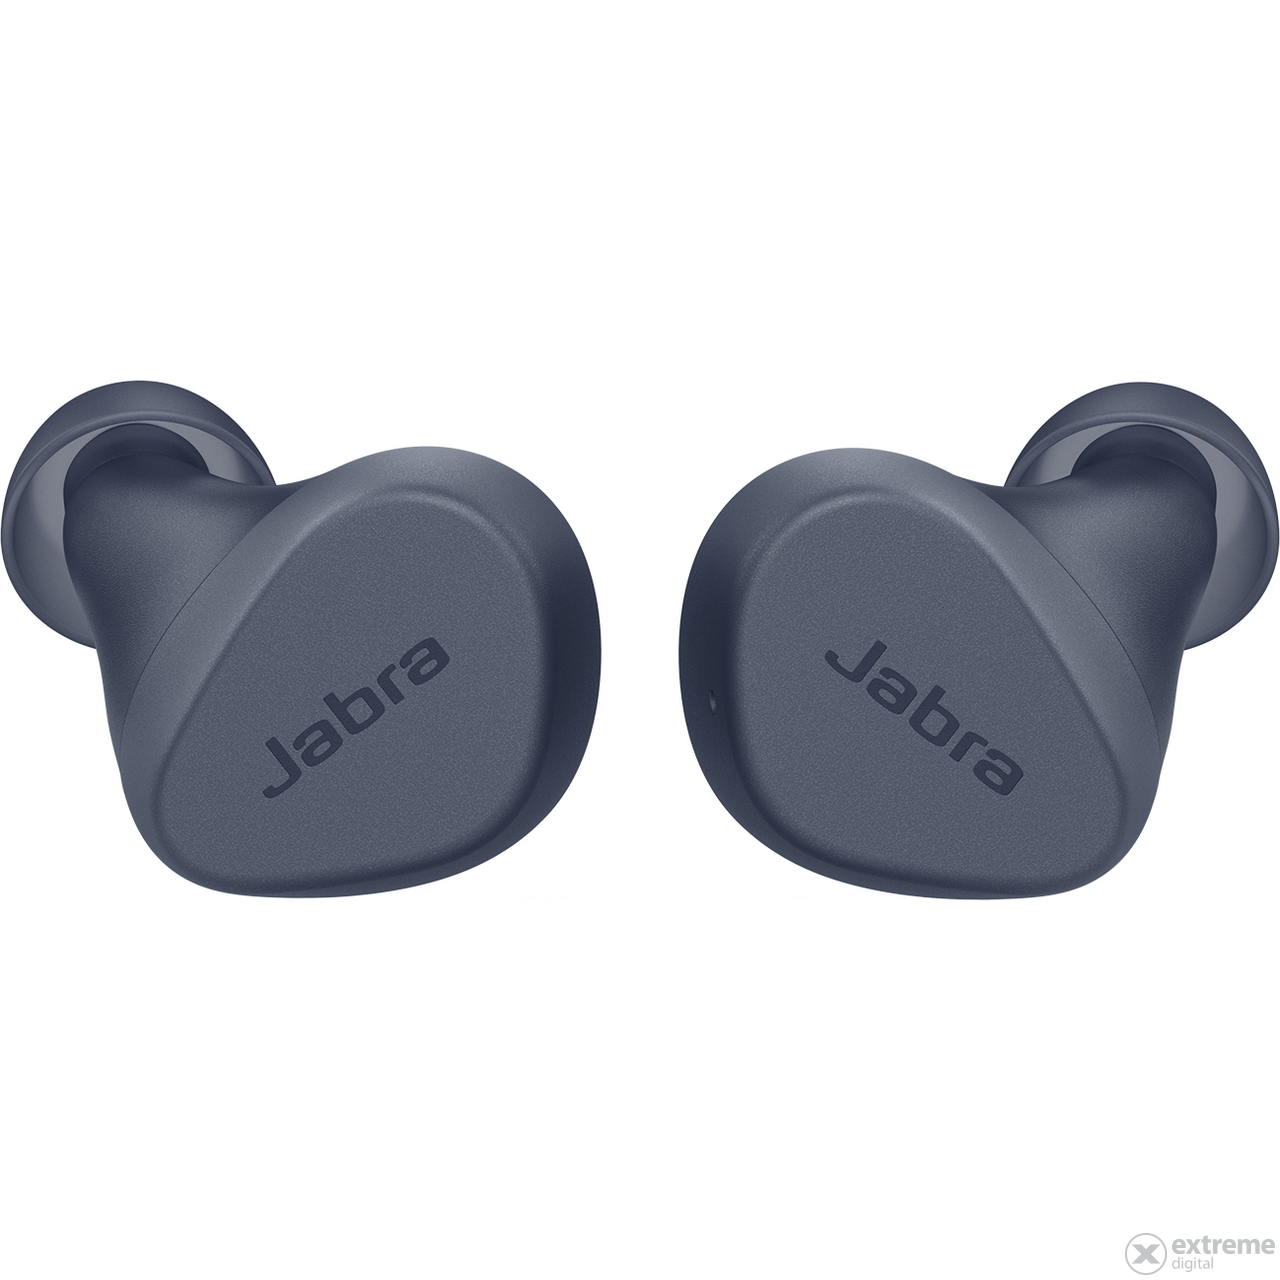 Bluetooth slušalke Jabra Elite 2, mornarsko modre